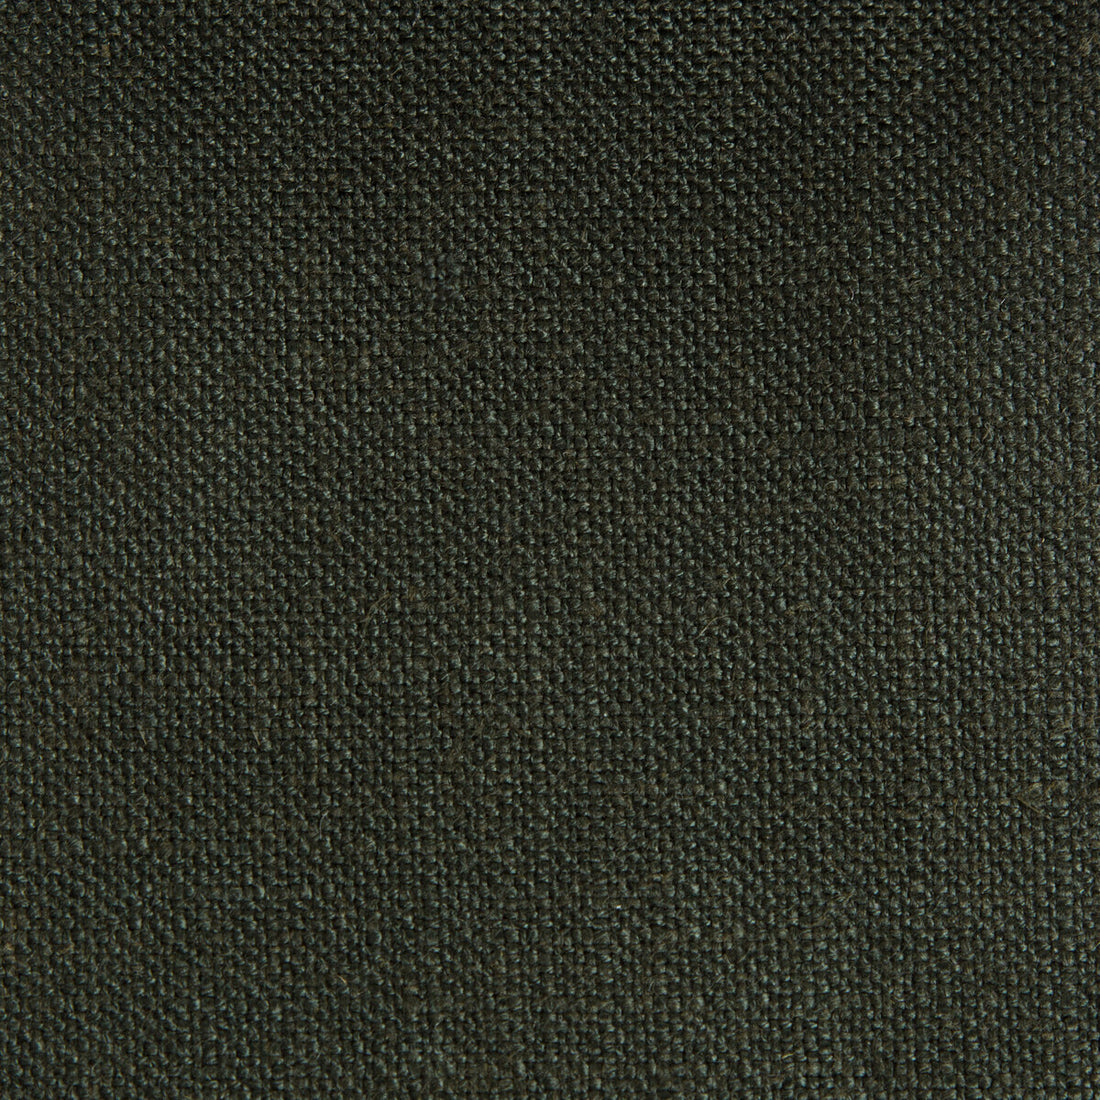 Peru fabric in black color - pattern GDT5548.031.0 - by Gaston y Daniela in the Gaston Nuevo Mundo collection